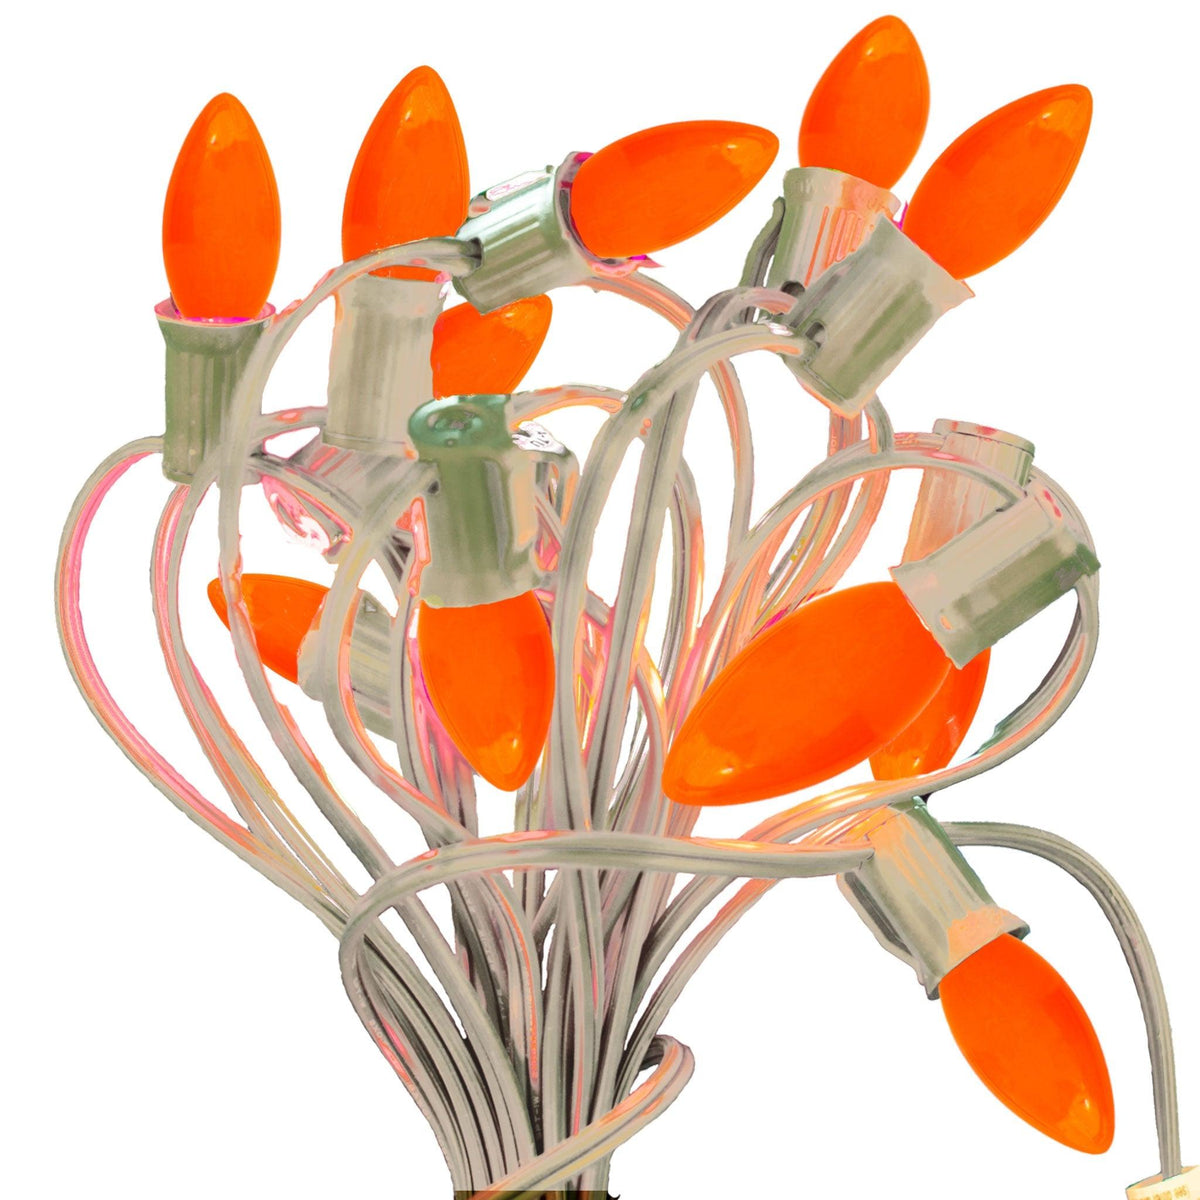 Buy brand new boxes of C-7 & C-9 Solid Ceramic Orange Christmas Light Bulbs at LeeDisplay.com